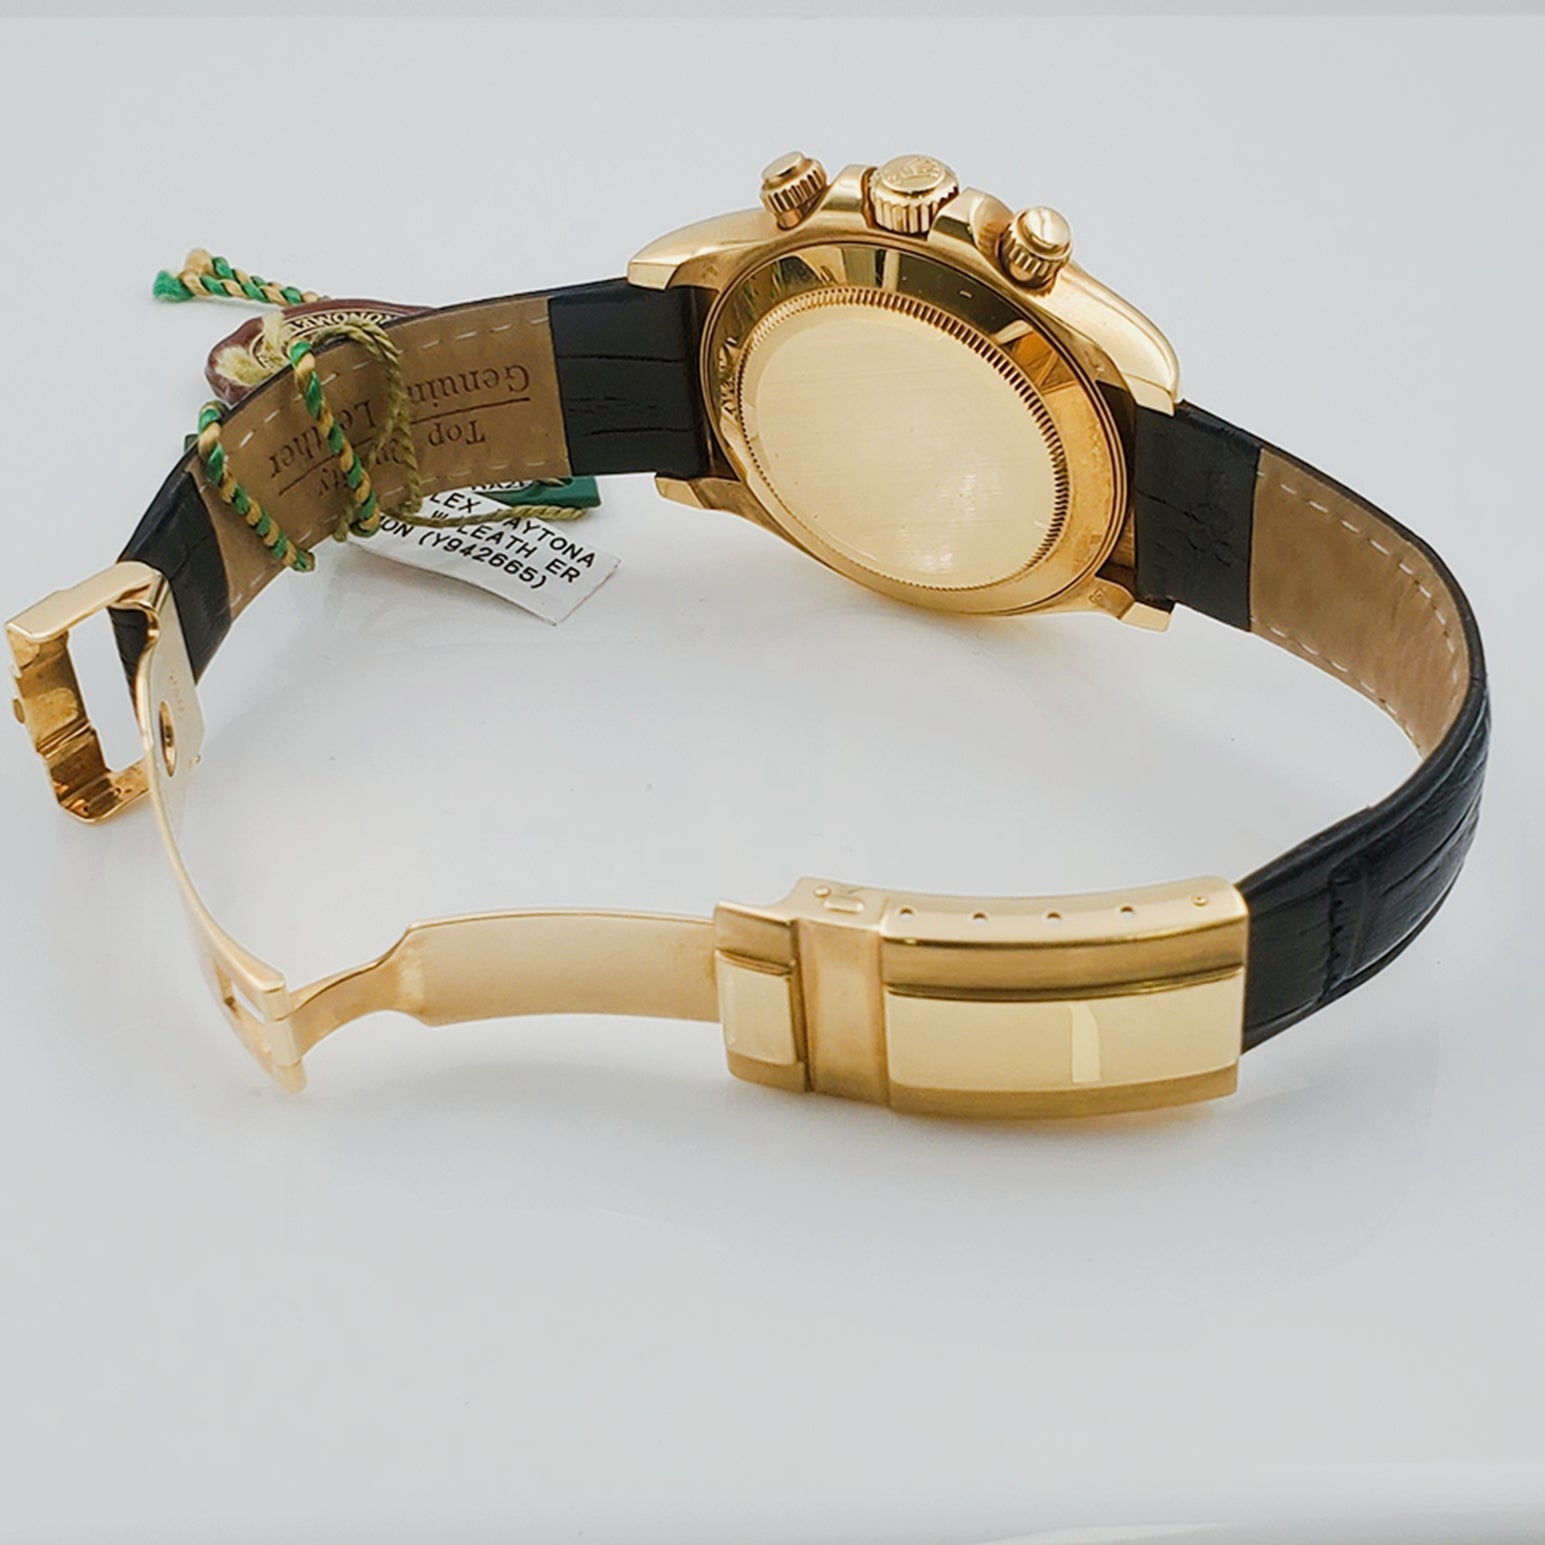 Men's Rolex 40mm Daytona 18K Yellow Gold Wristwatch w/ Black Leather Strap & White Dial. (Pre-Owned 116518)